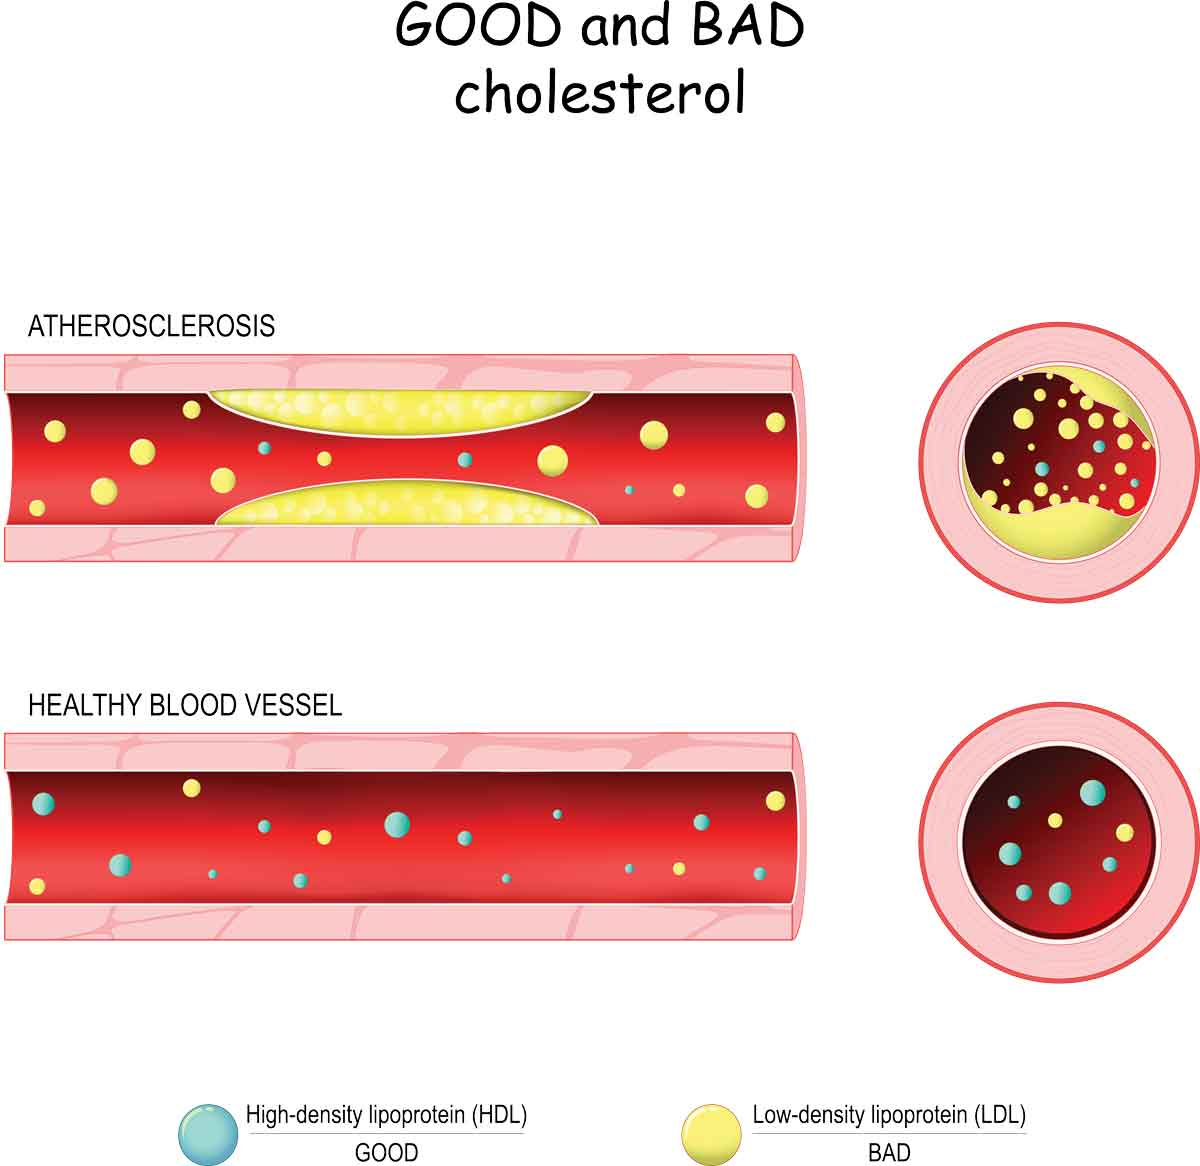 good (HDL) and bad (LDL) cholesterol